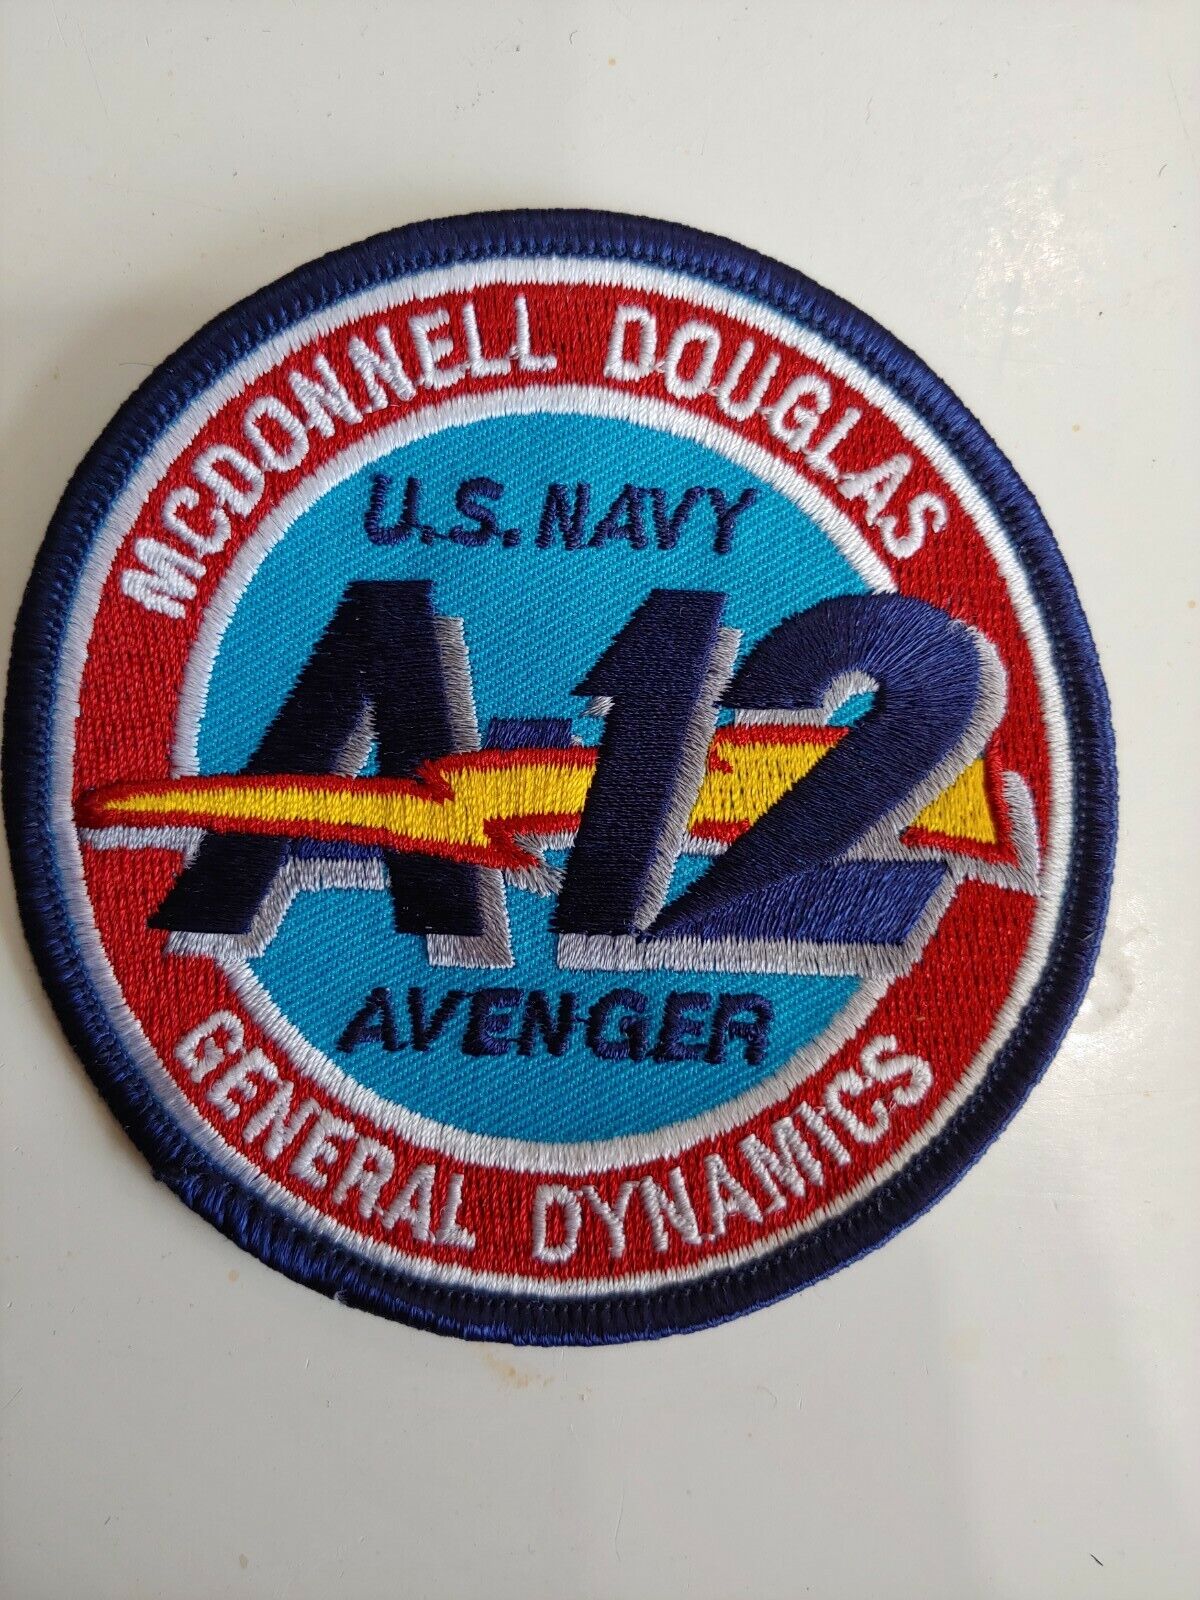 US NAVY AVIATION A-12 PATCH McDONNELL DOUGLAS GENERAL DYNAMICS Original USN